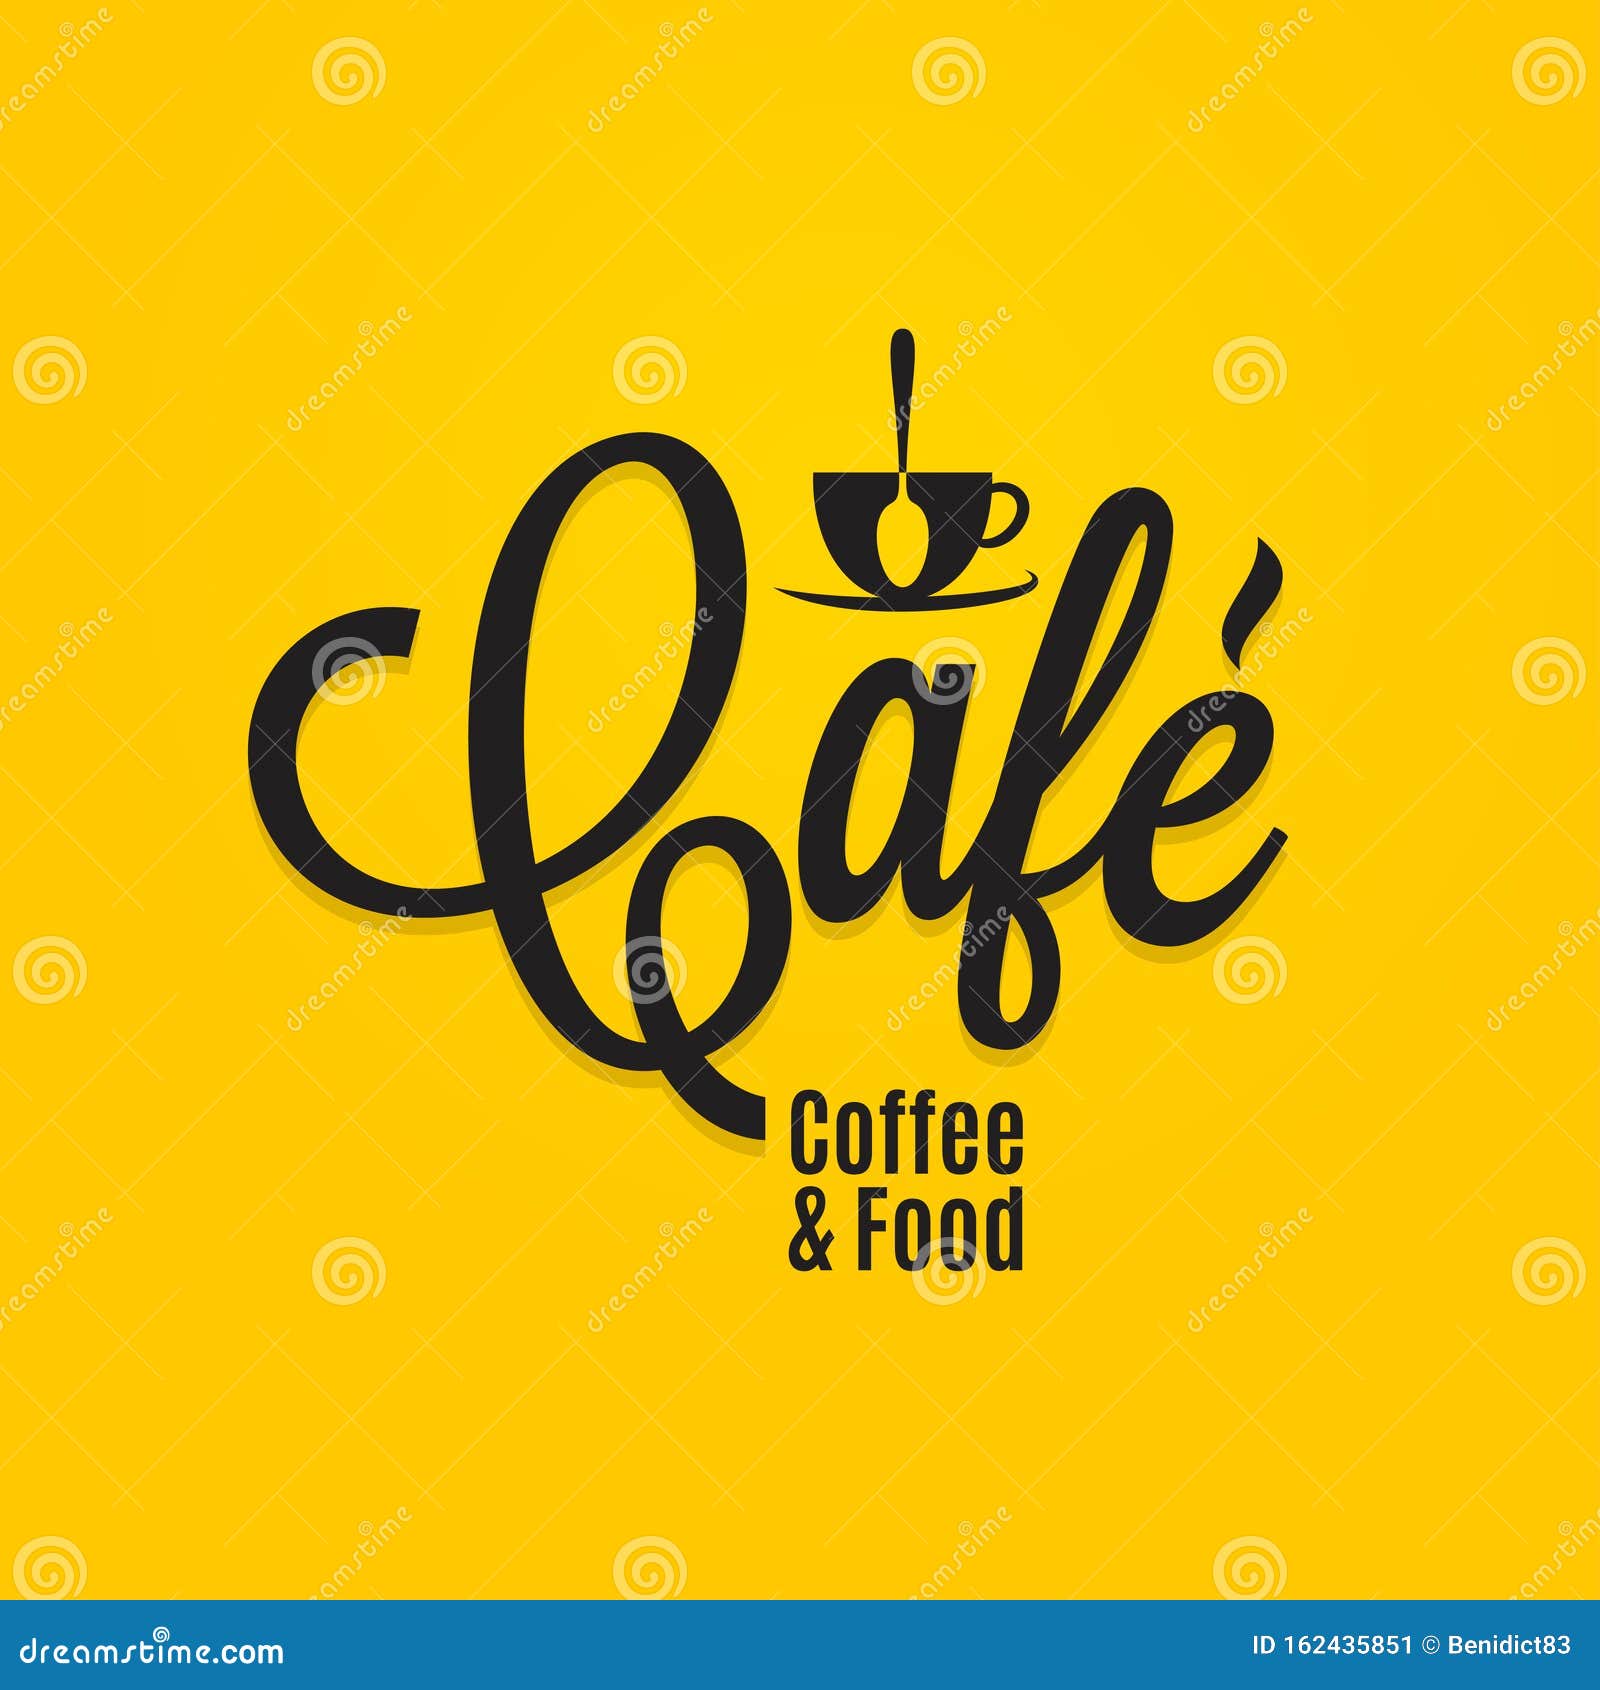 cafe coffee and food menu. coffee cup logo